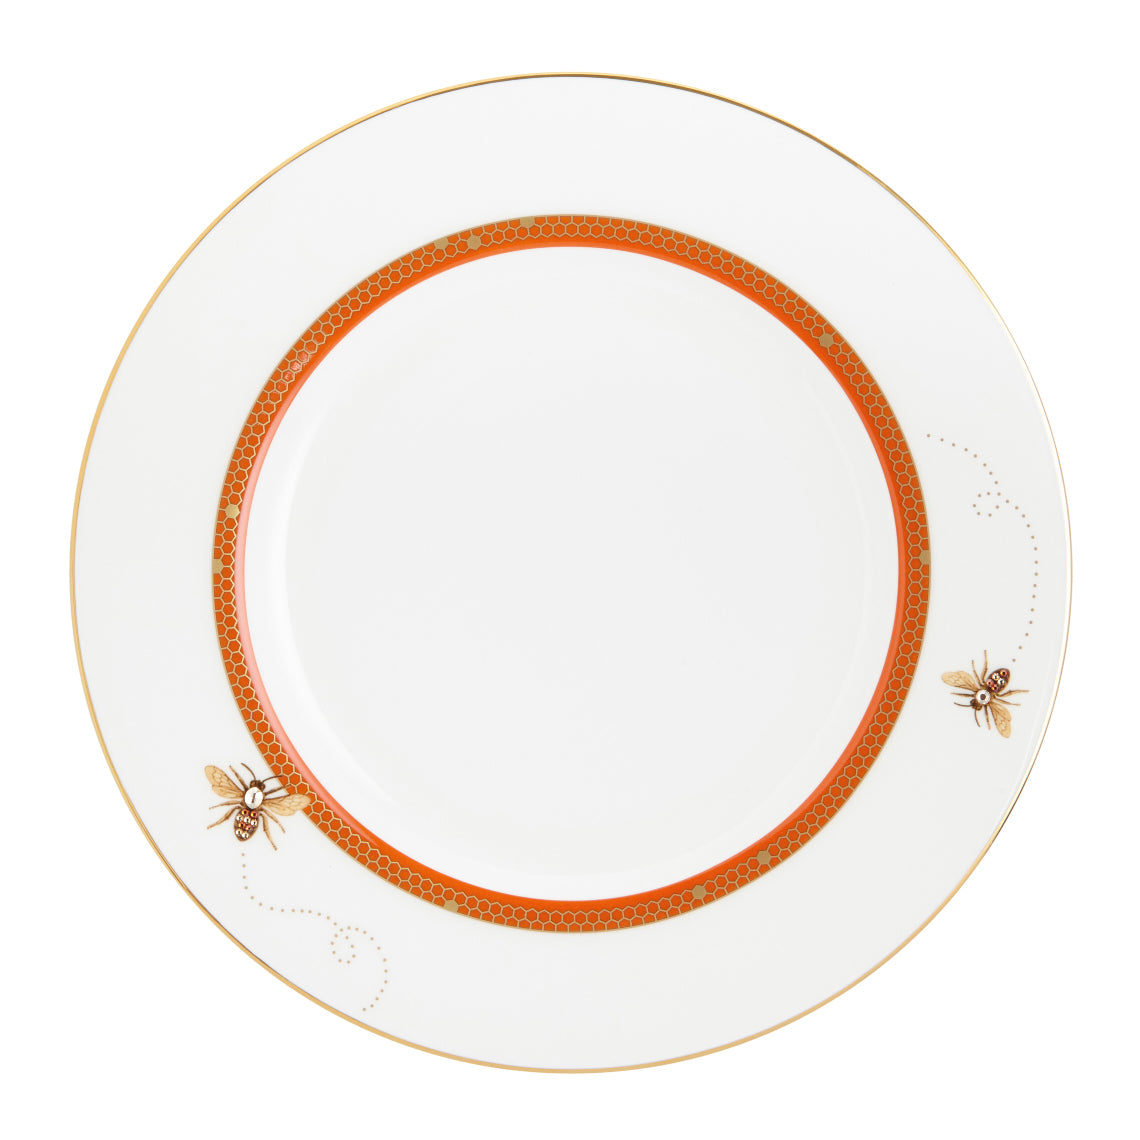 My Honeybee dinner plate with crystal